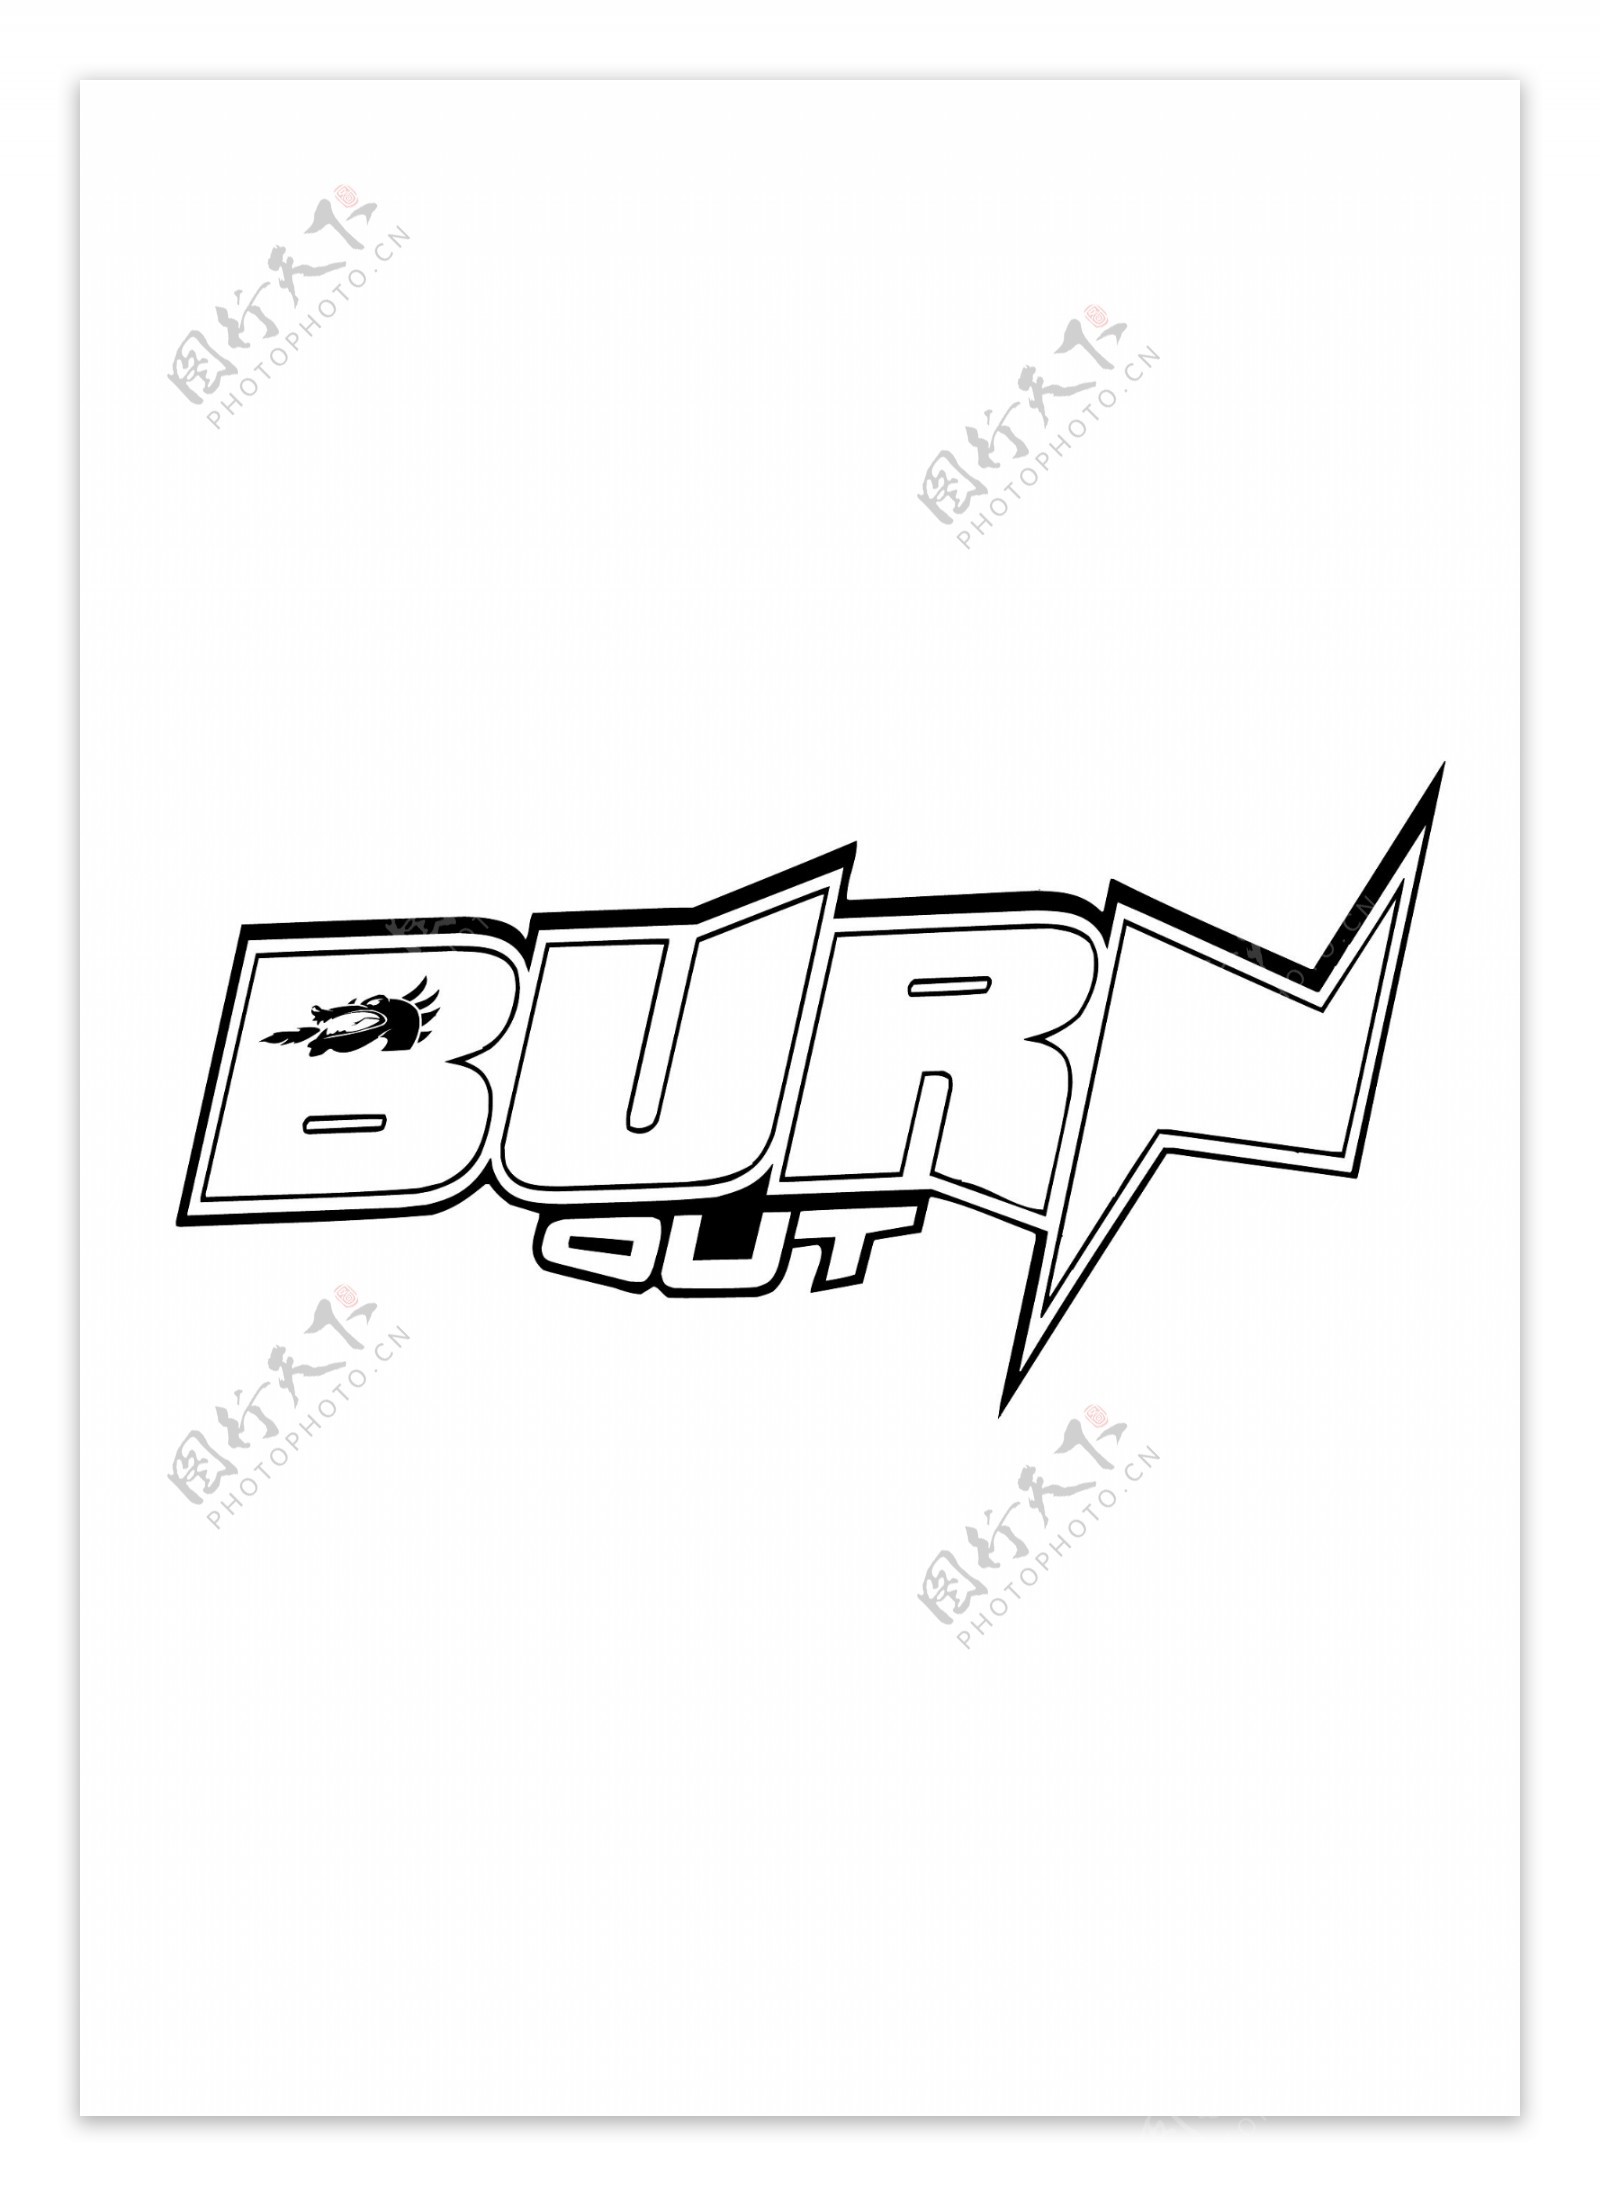 Burnoutlogo设计欣赏Burnout航空运输LOGO下载标志设计欣赏